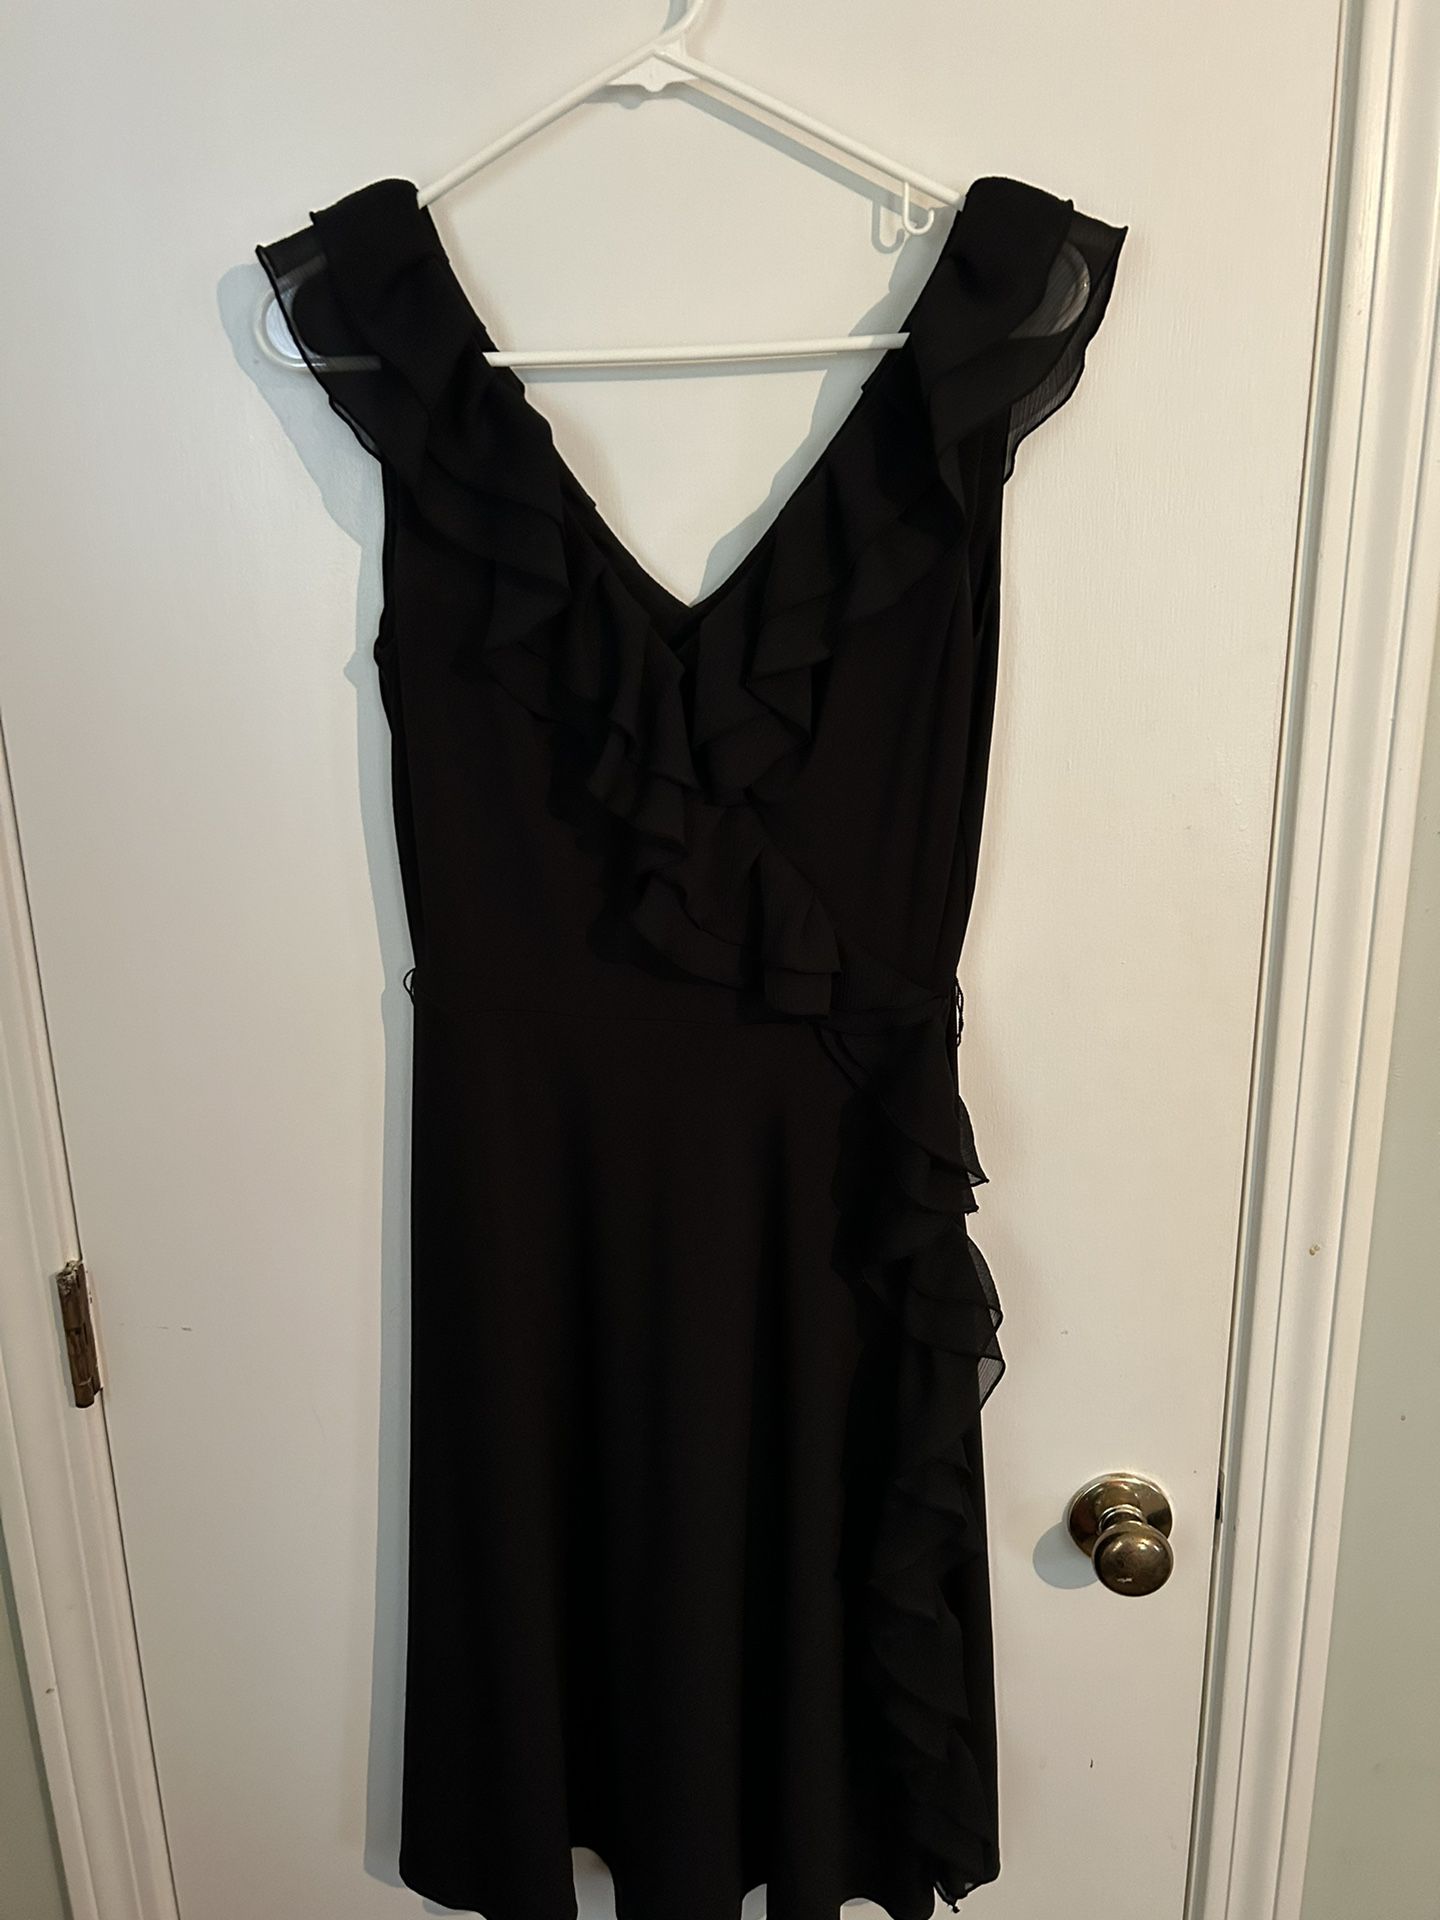 White House Black Market Dress, Size 6